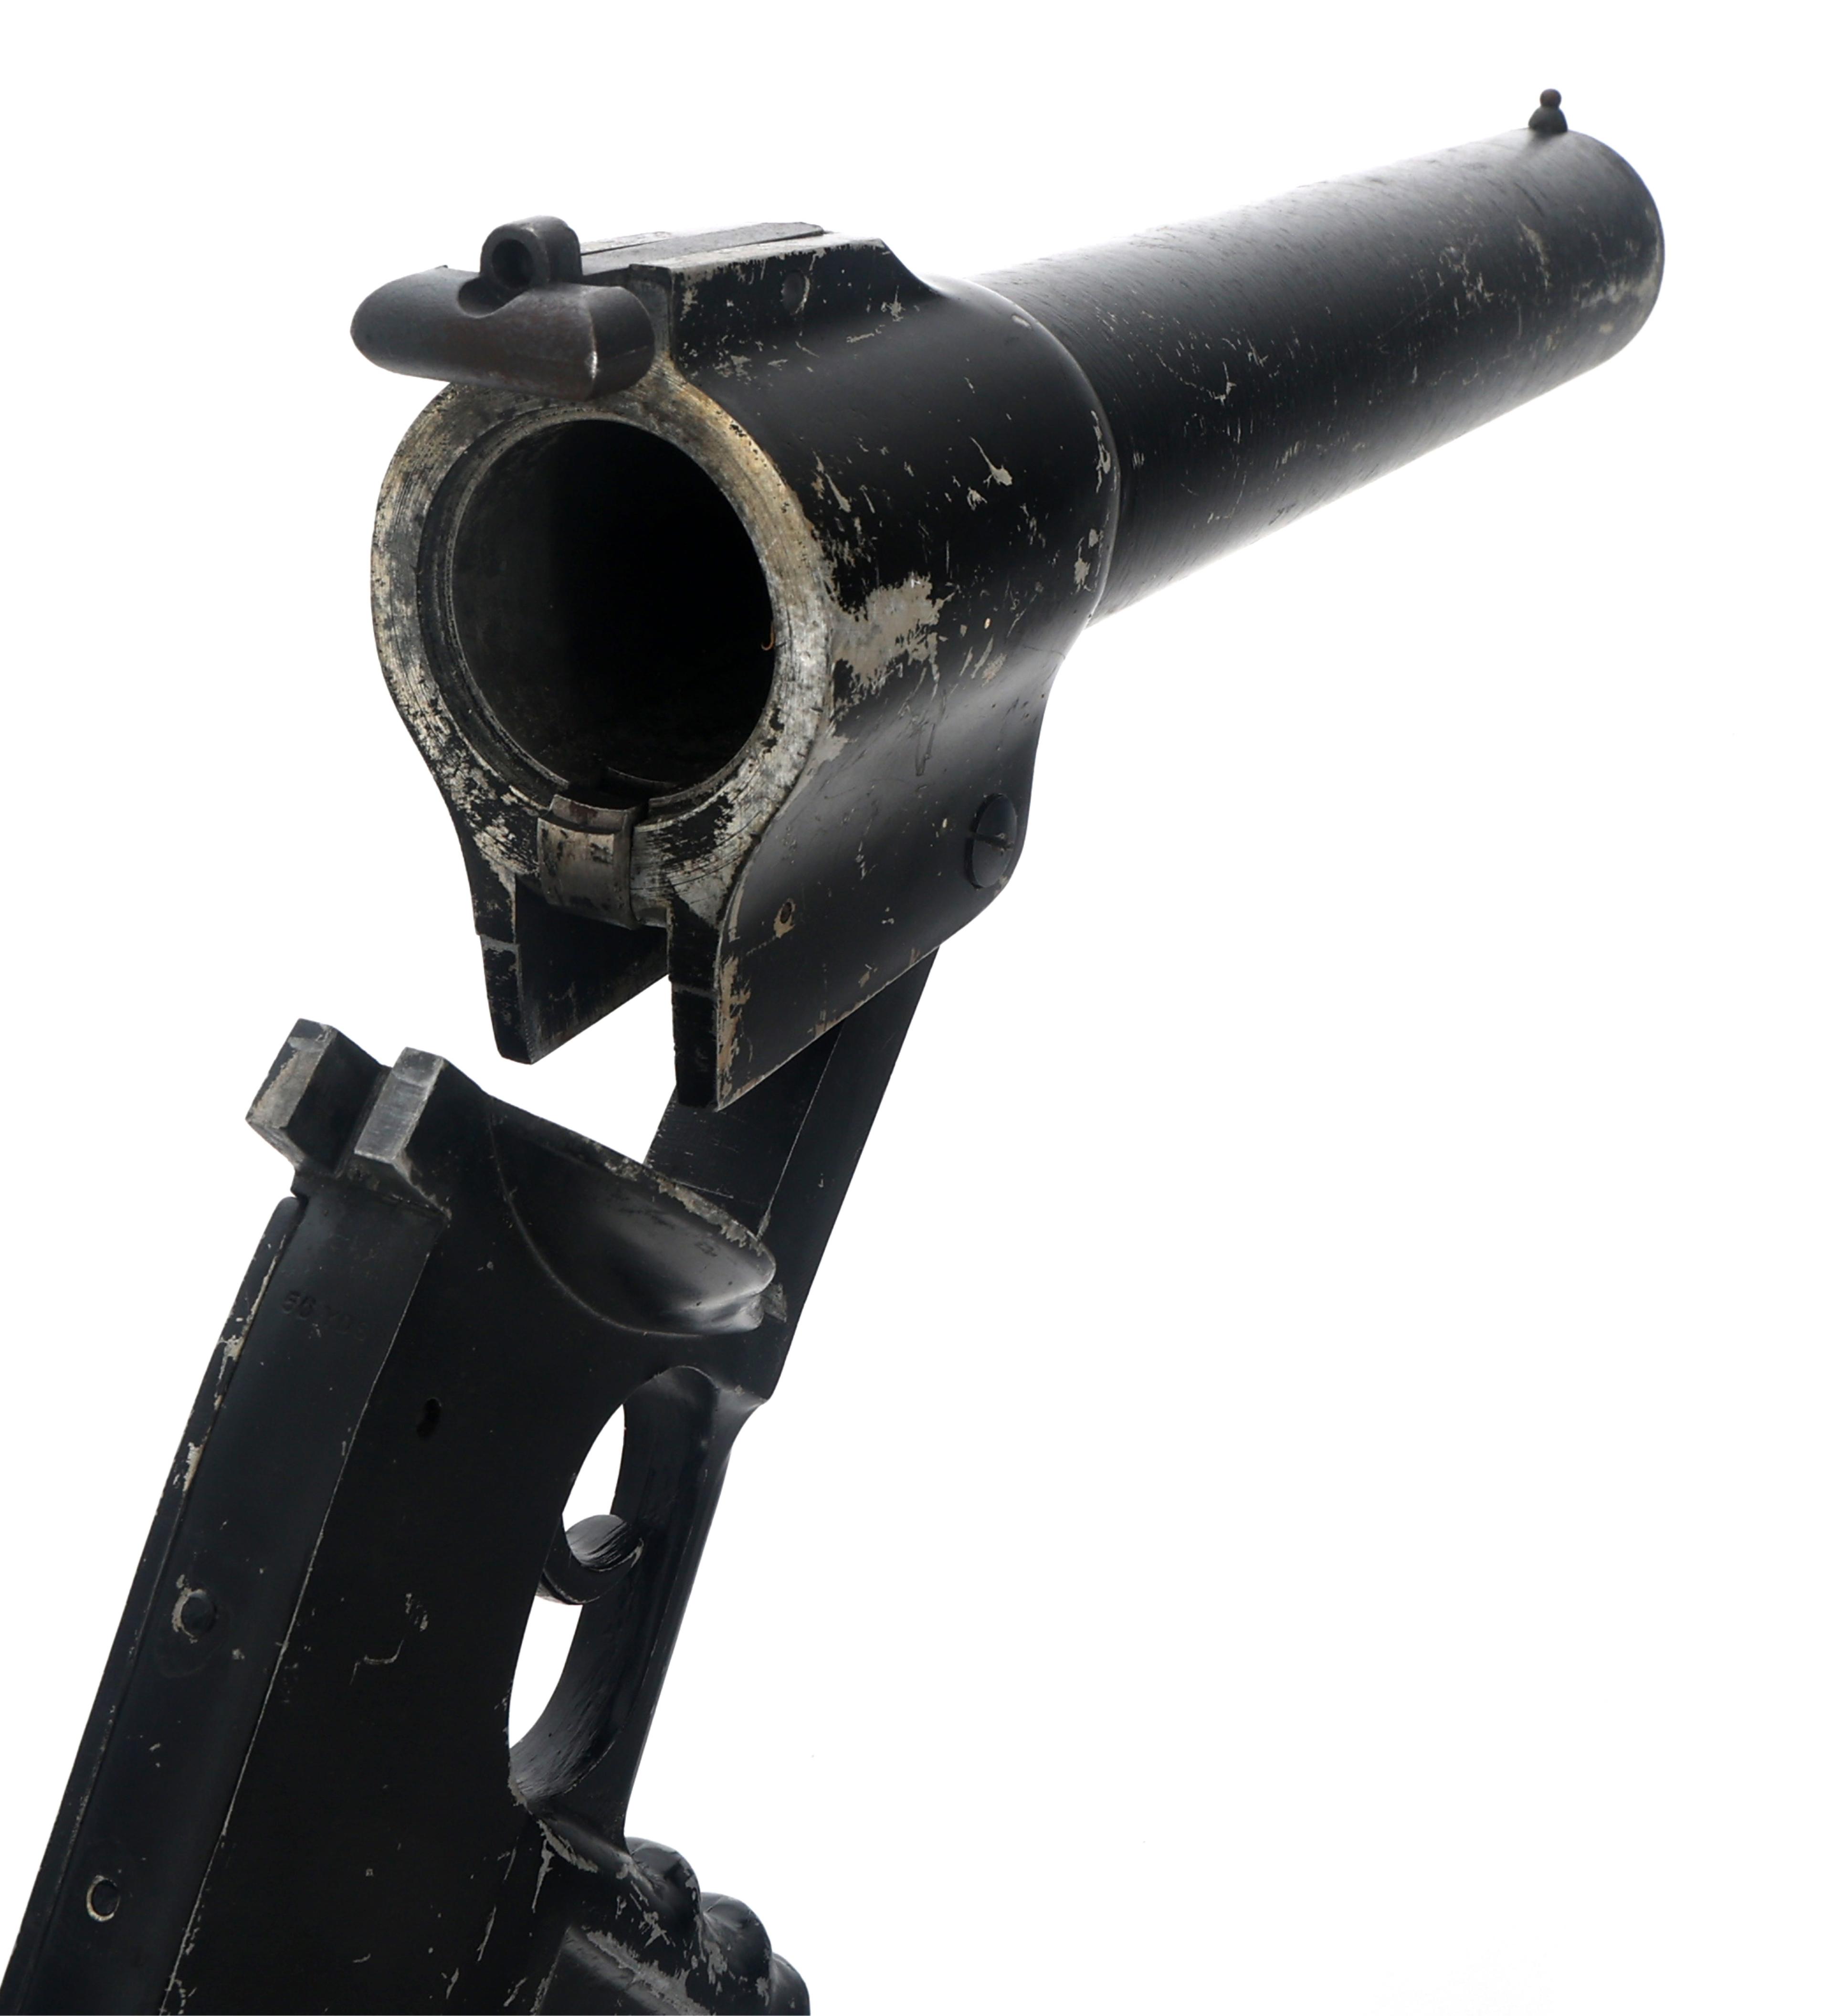 FEDERAL LABORATORIES INC MODEL 203-A 38mm GAS GUN